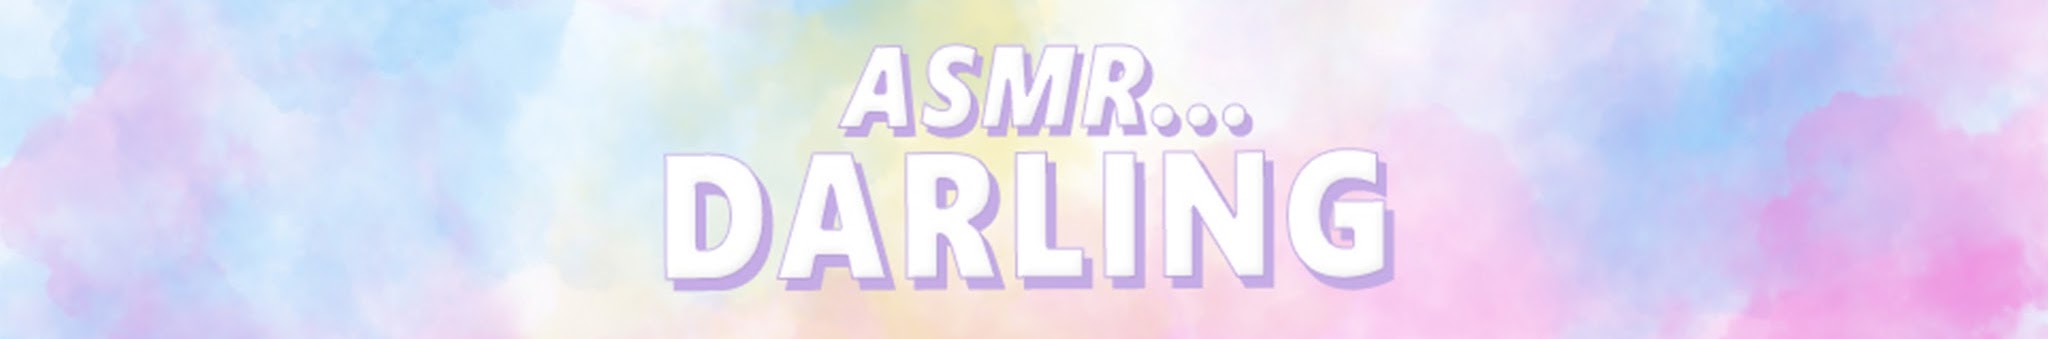 ASMR Darling_banner